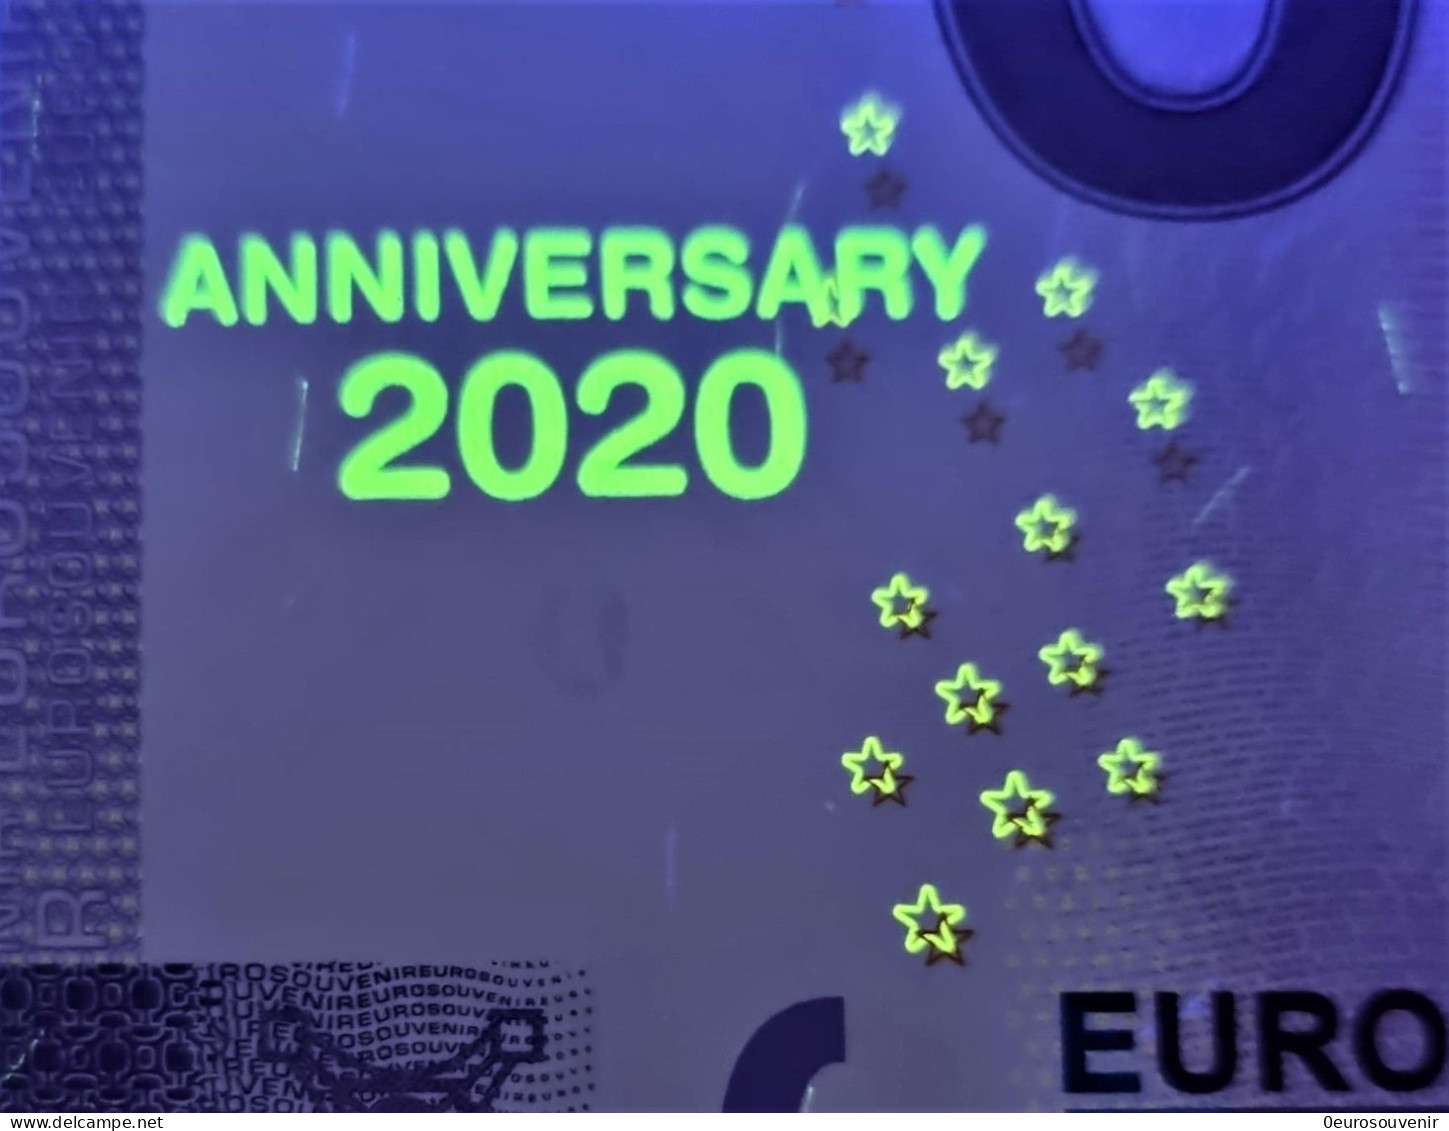 0-Euro XEJQ 2021-5 BERLINER SCHLOSS Set NORMAL+ANNIVERSARY - Private Proofs / Unofficial